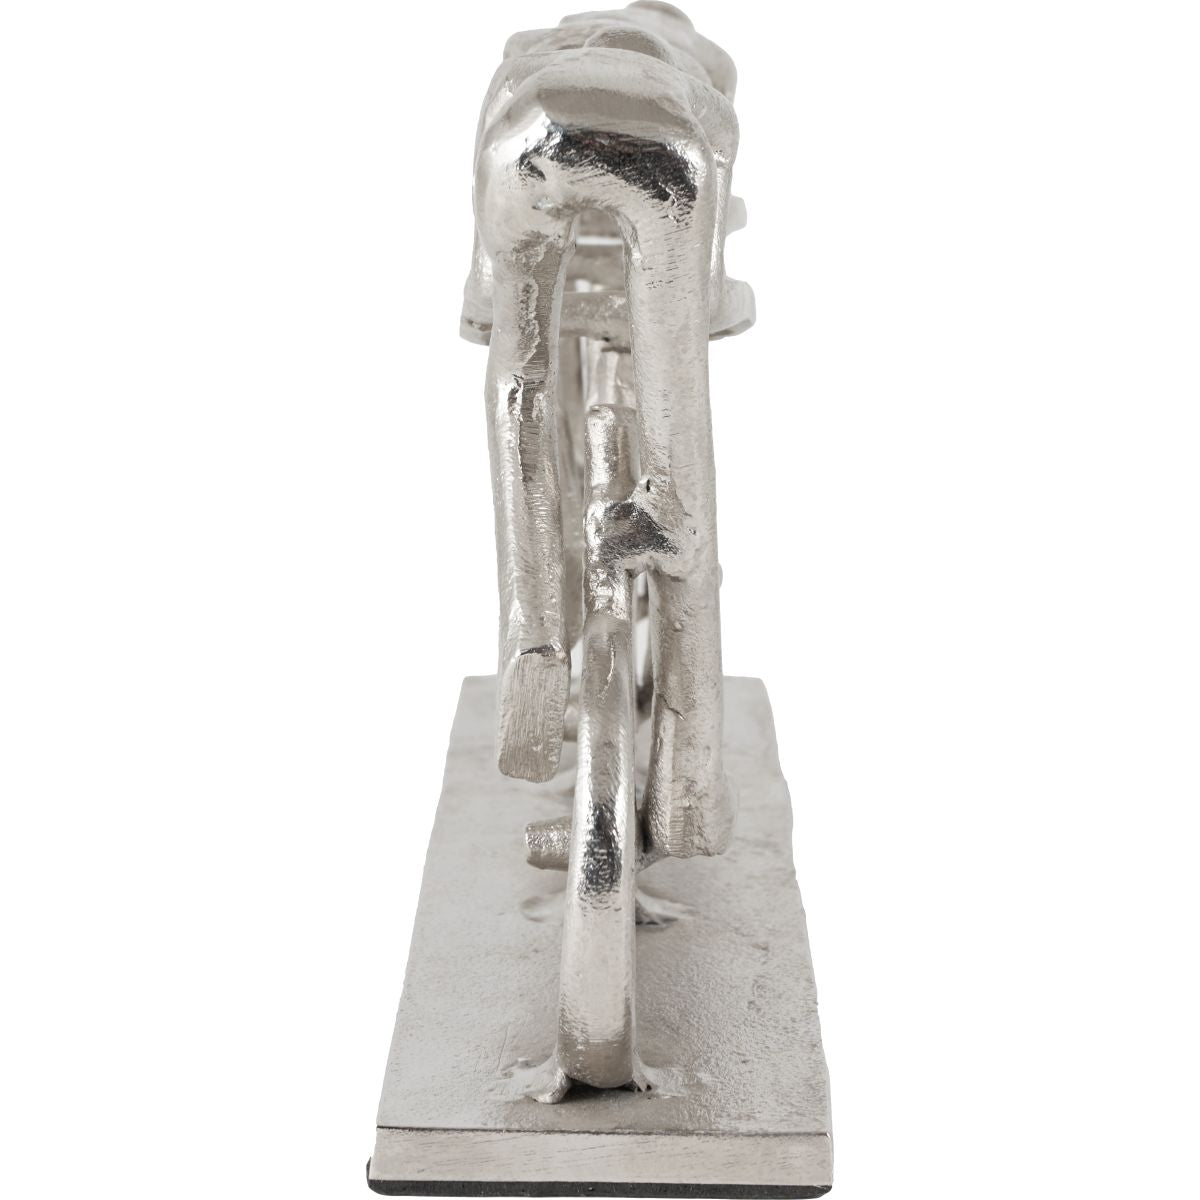 Shiny Silver Triple Cyclist Ornament